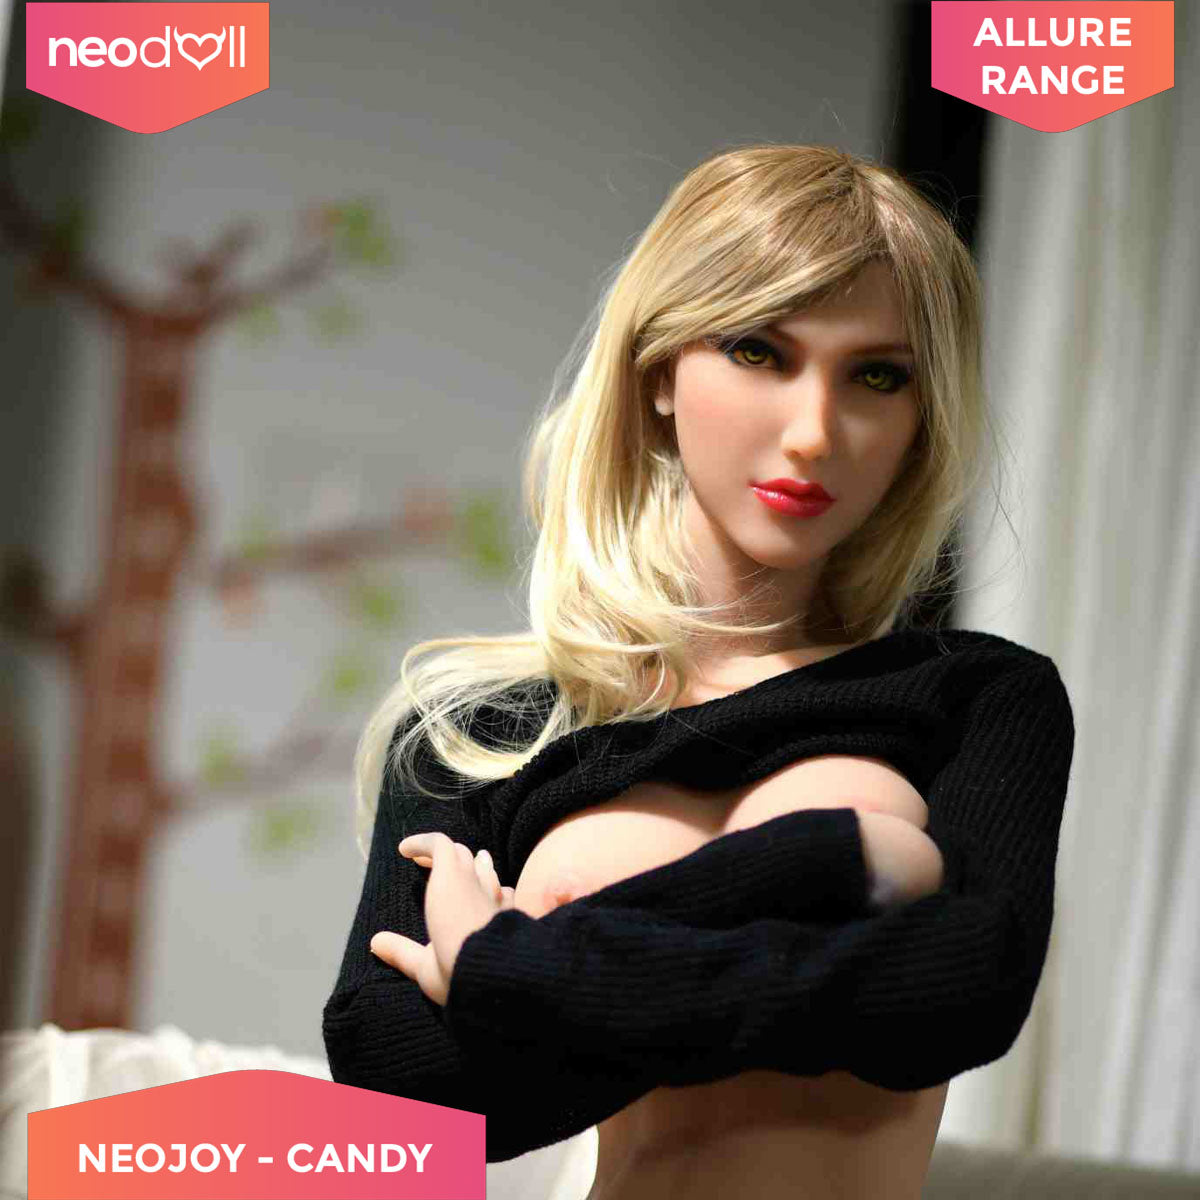 Neodoll Allure Candy - Realistic Sex Doll - 171cm - Tan